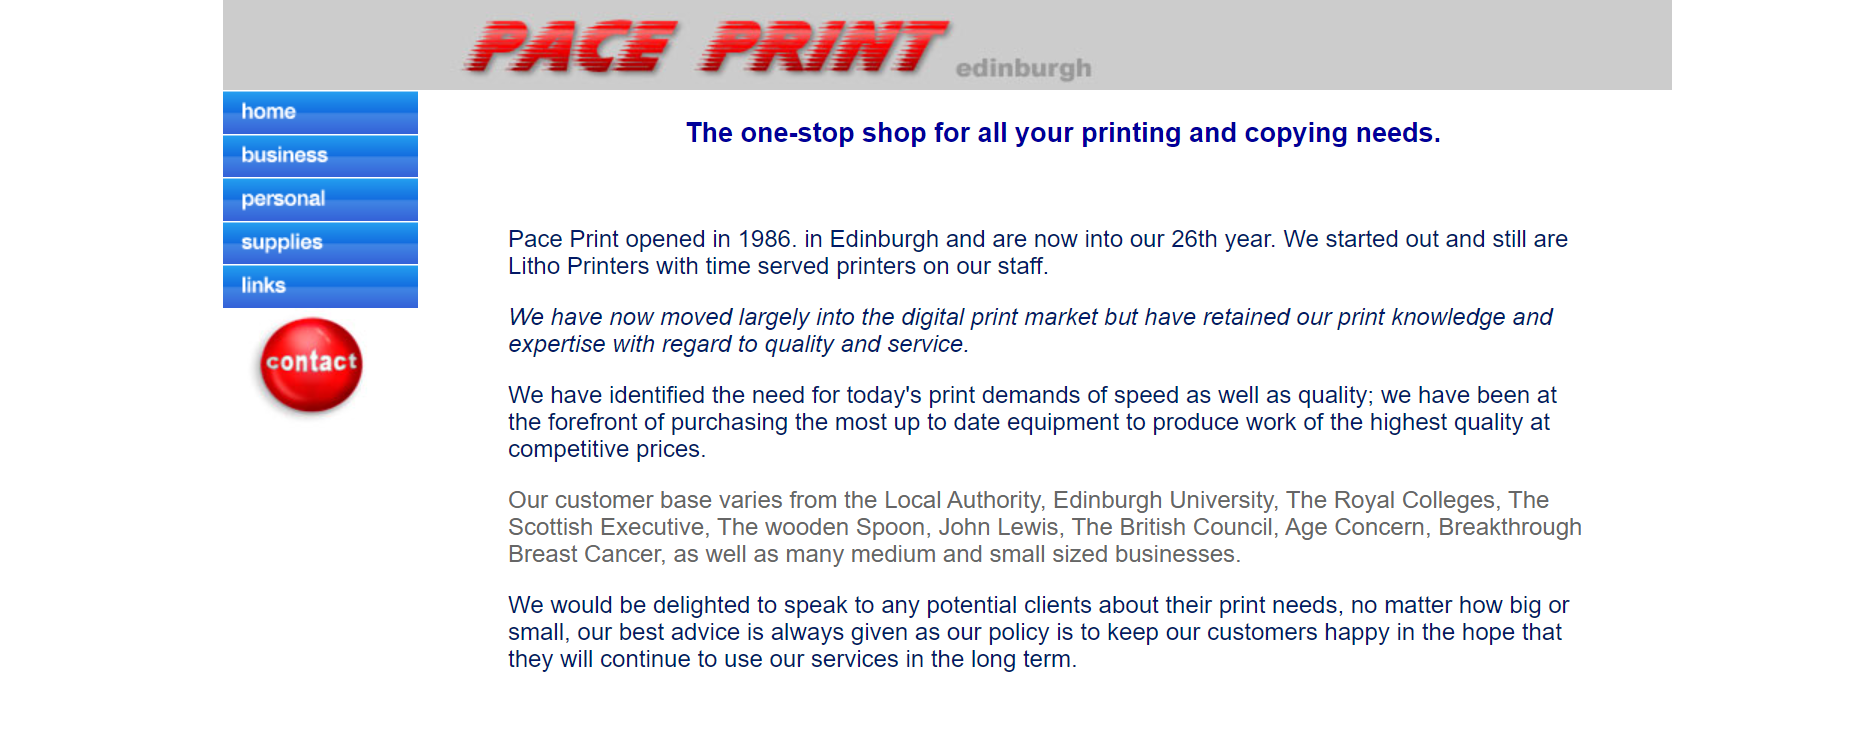 Pace Print Edinburgh